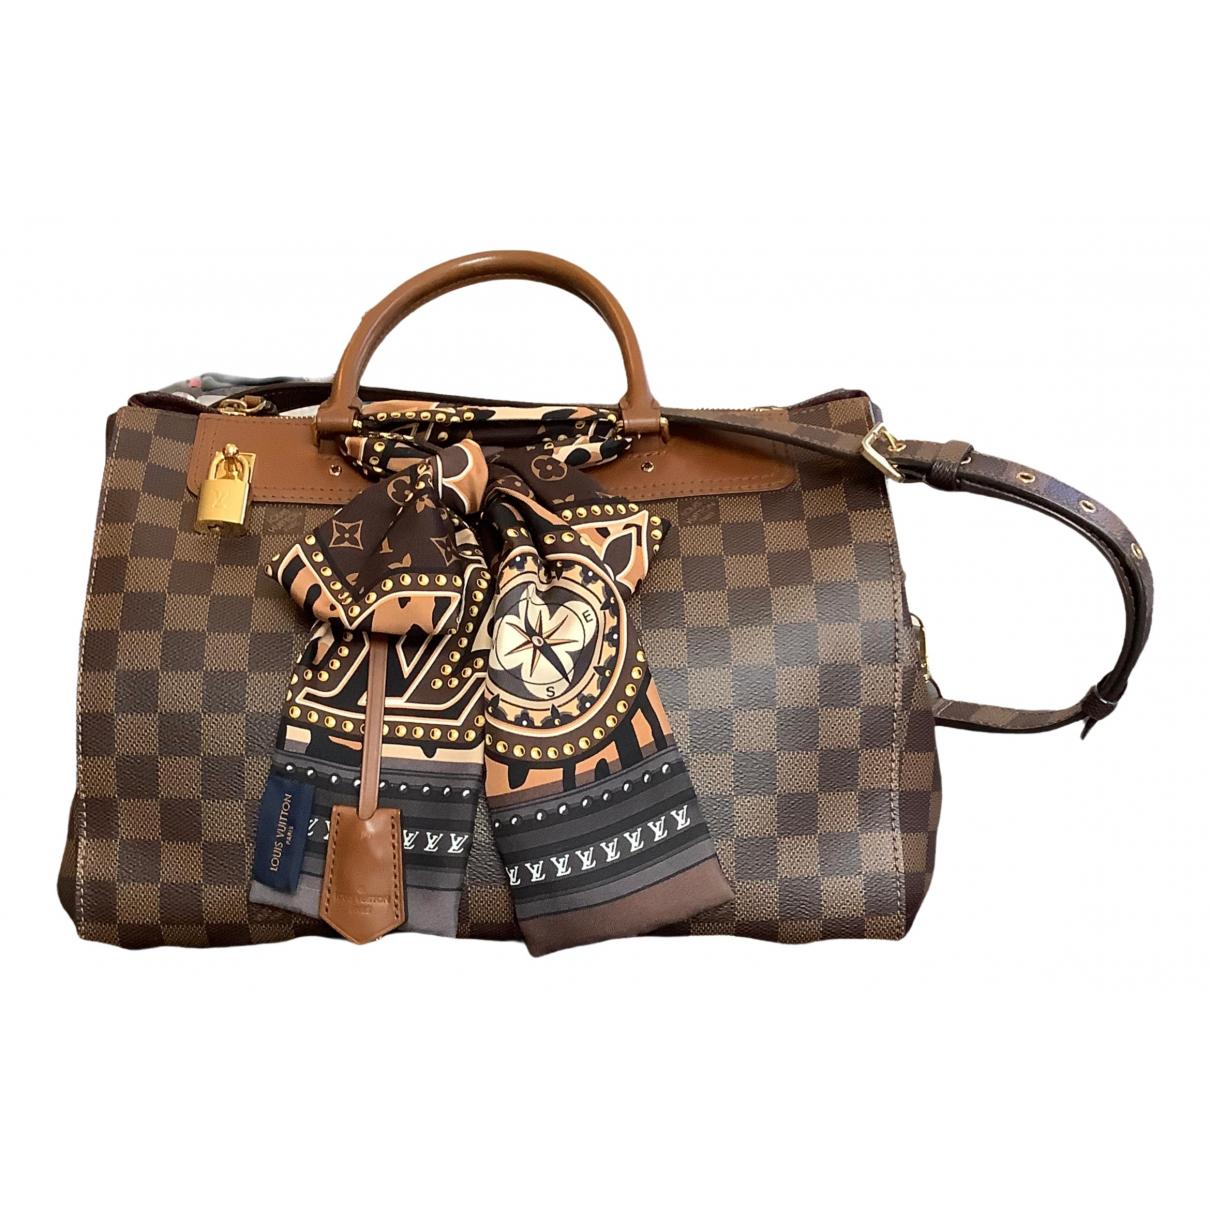 Louis Vuitton Greenwich Travel bag 395890